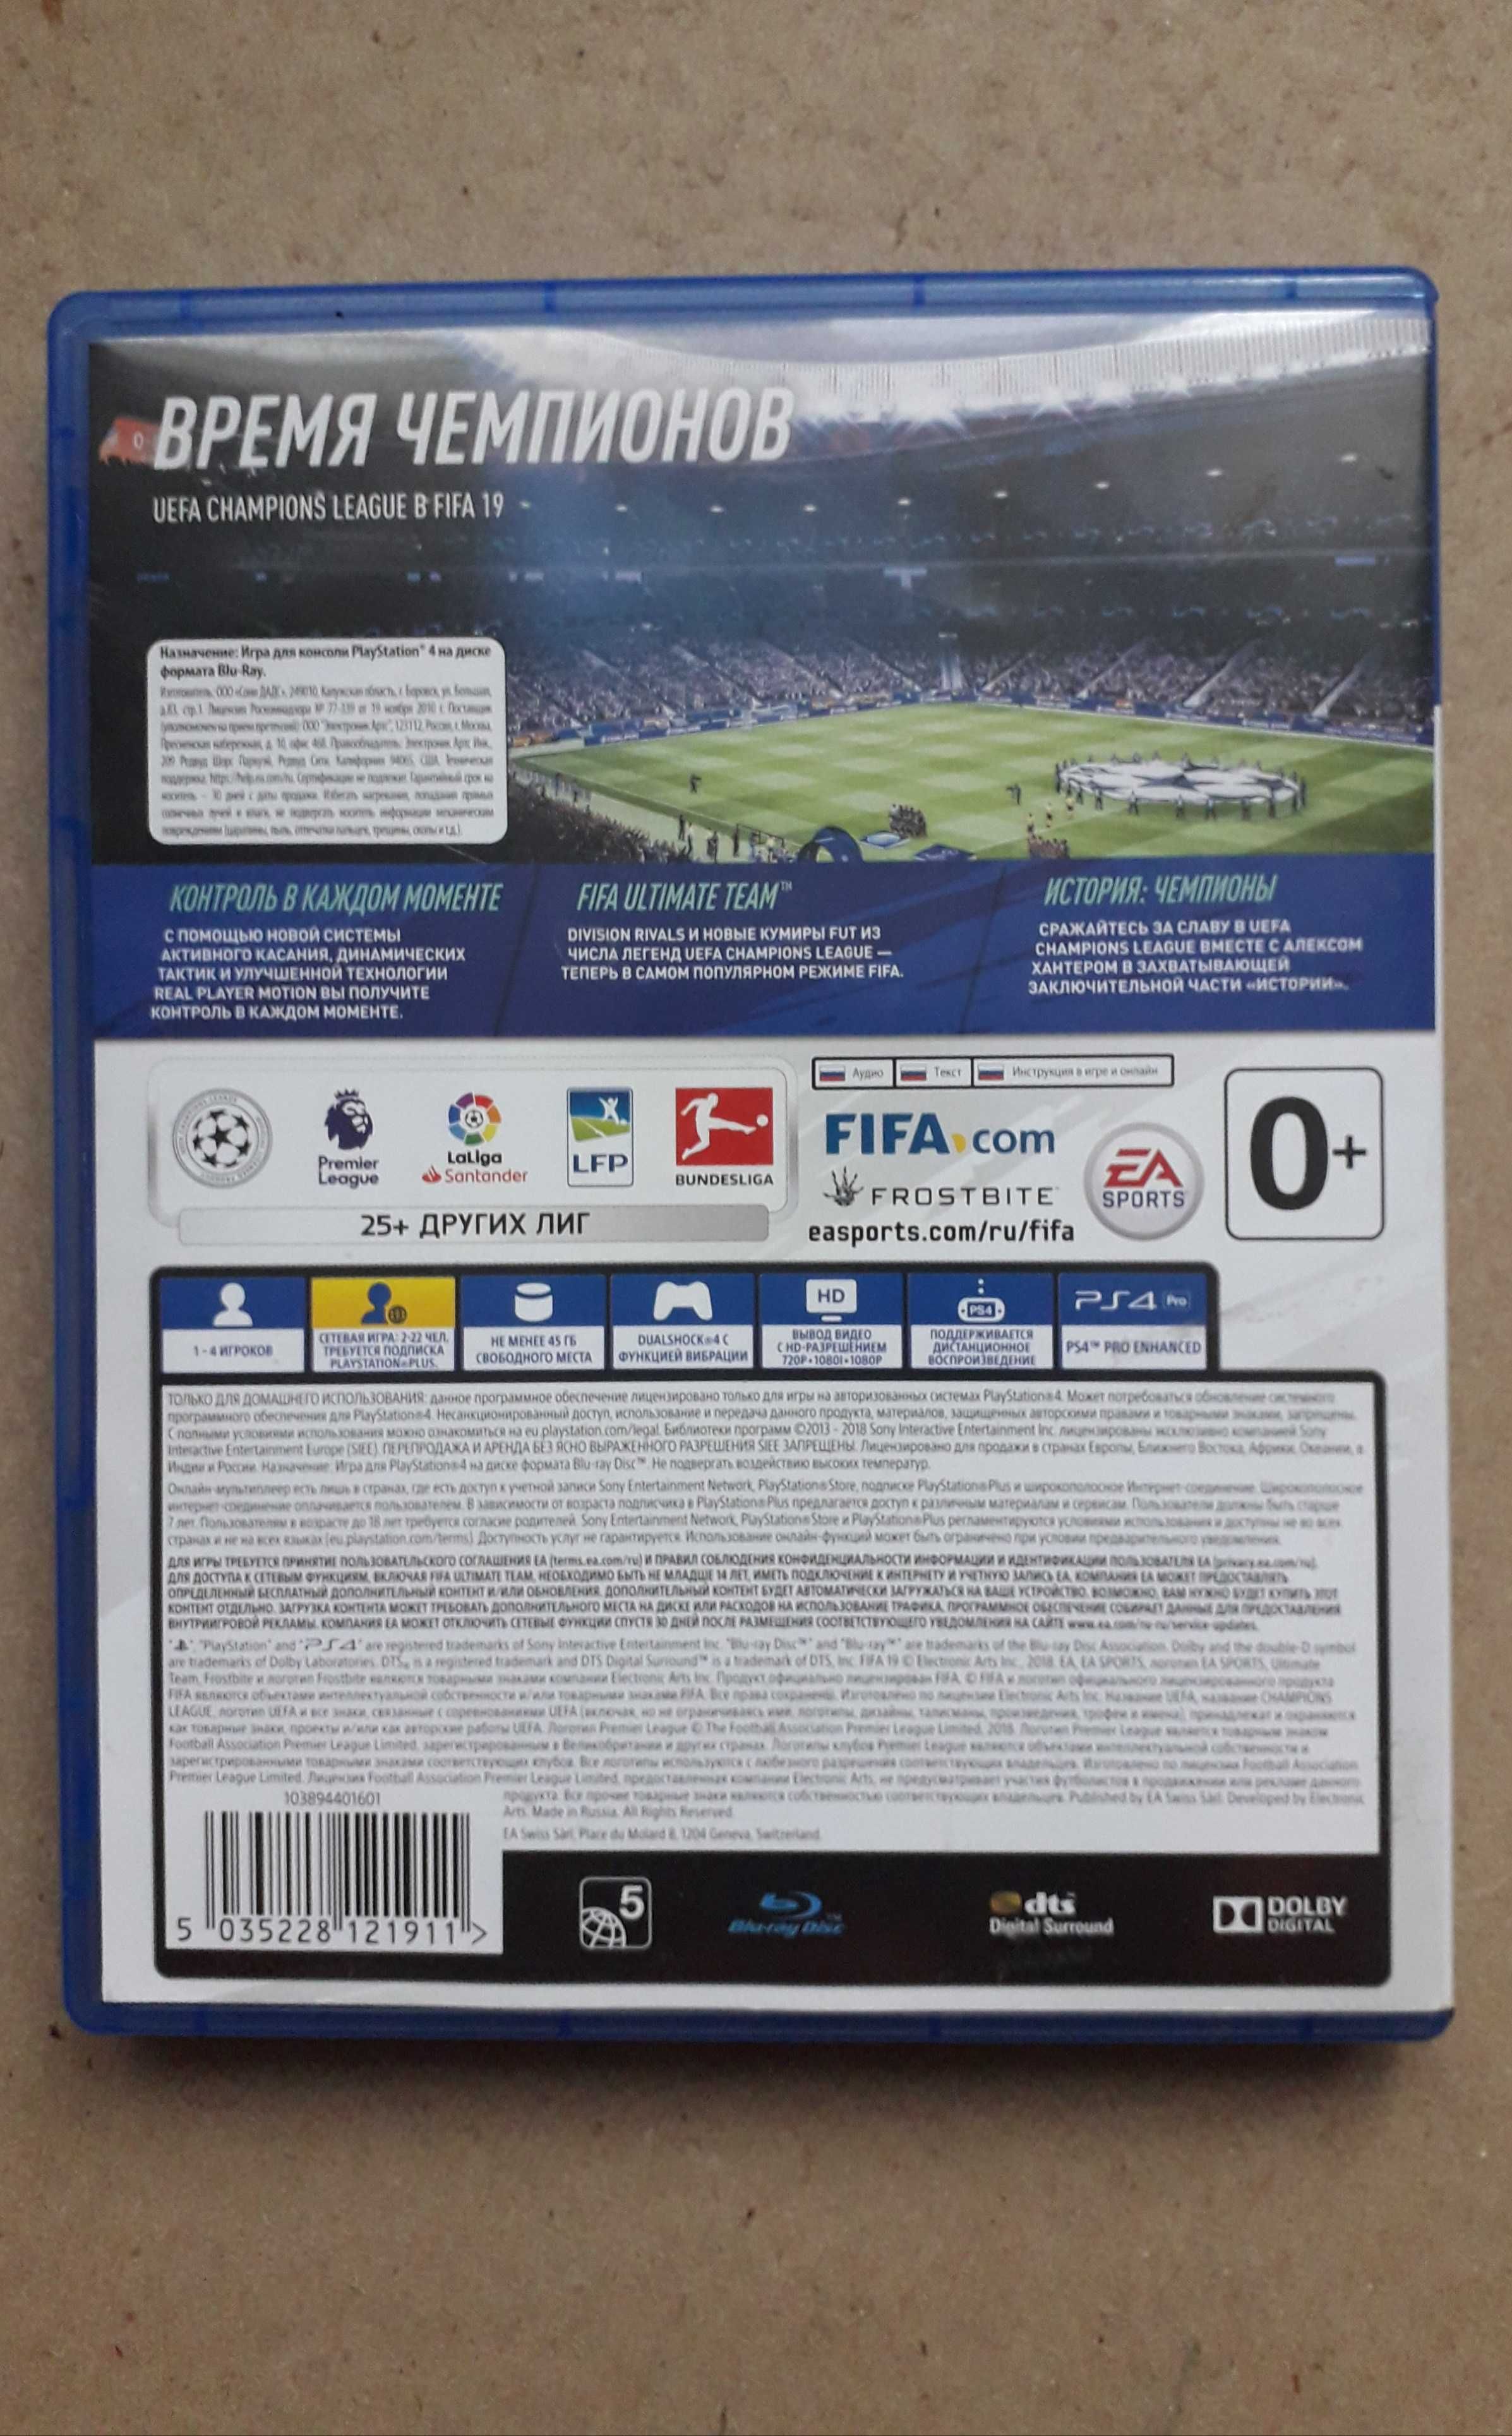 PSP 4, игра футбол на blue-ray диске, оригинал/лицензия